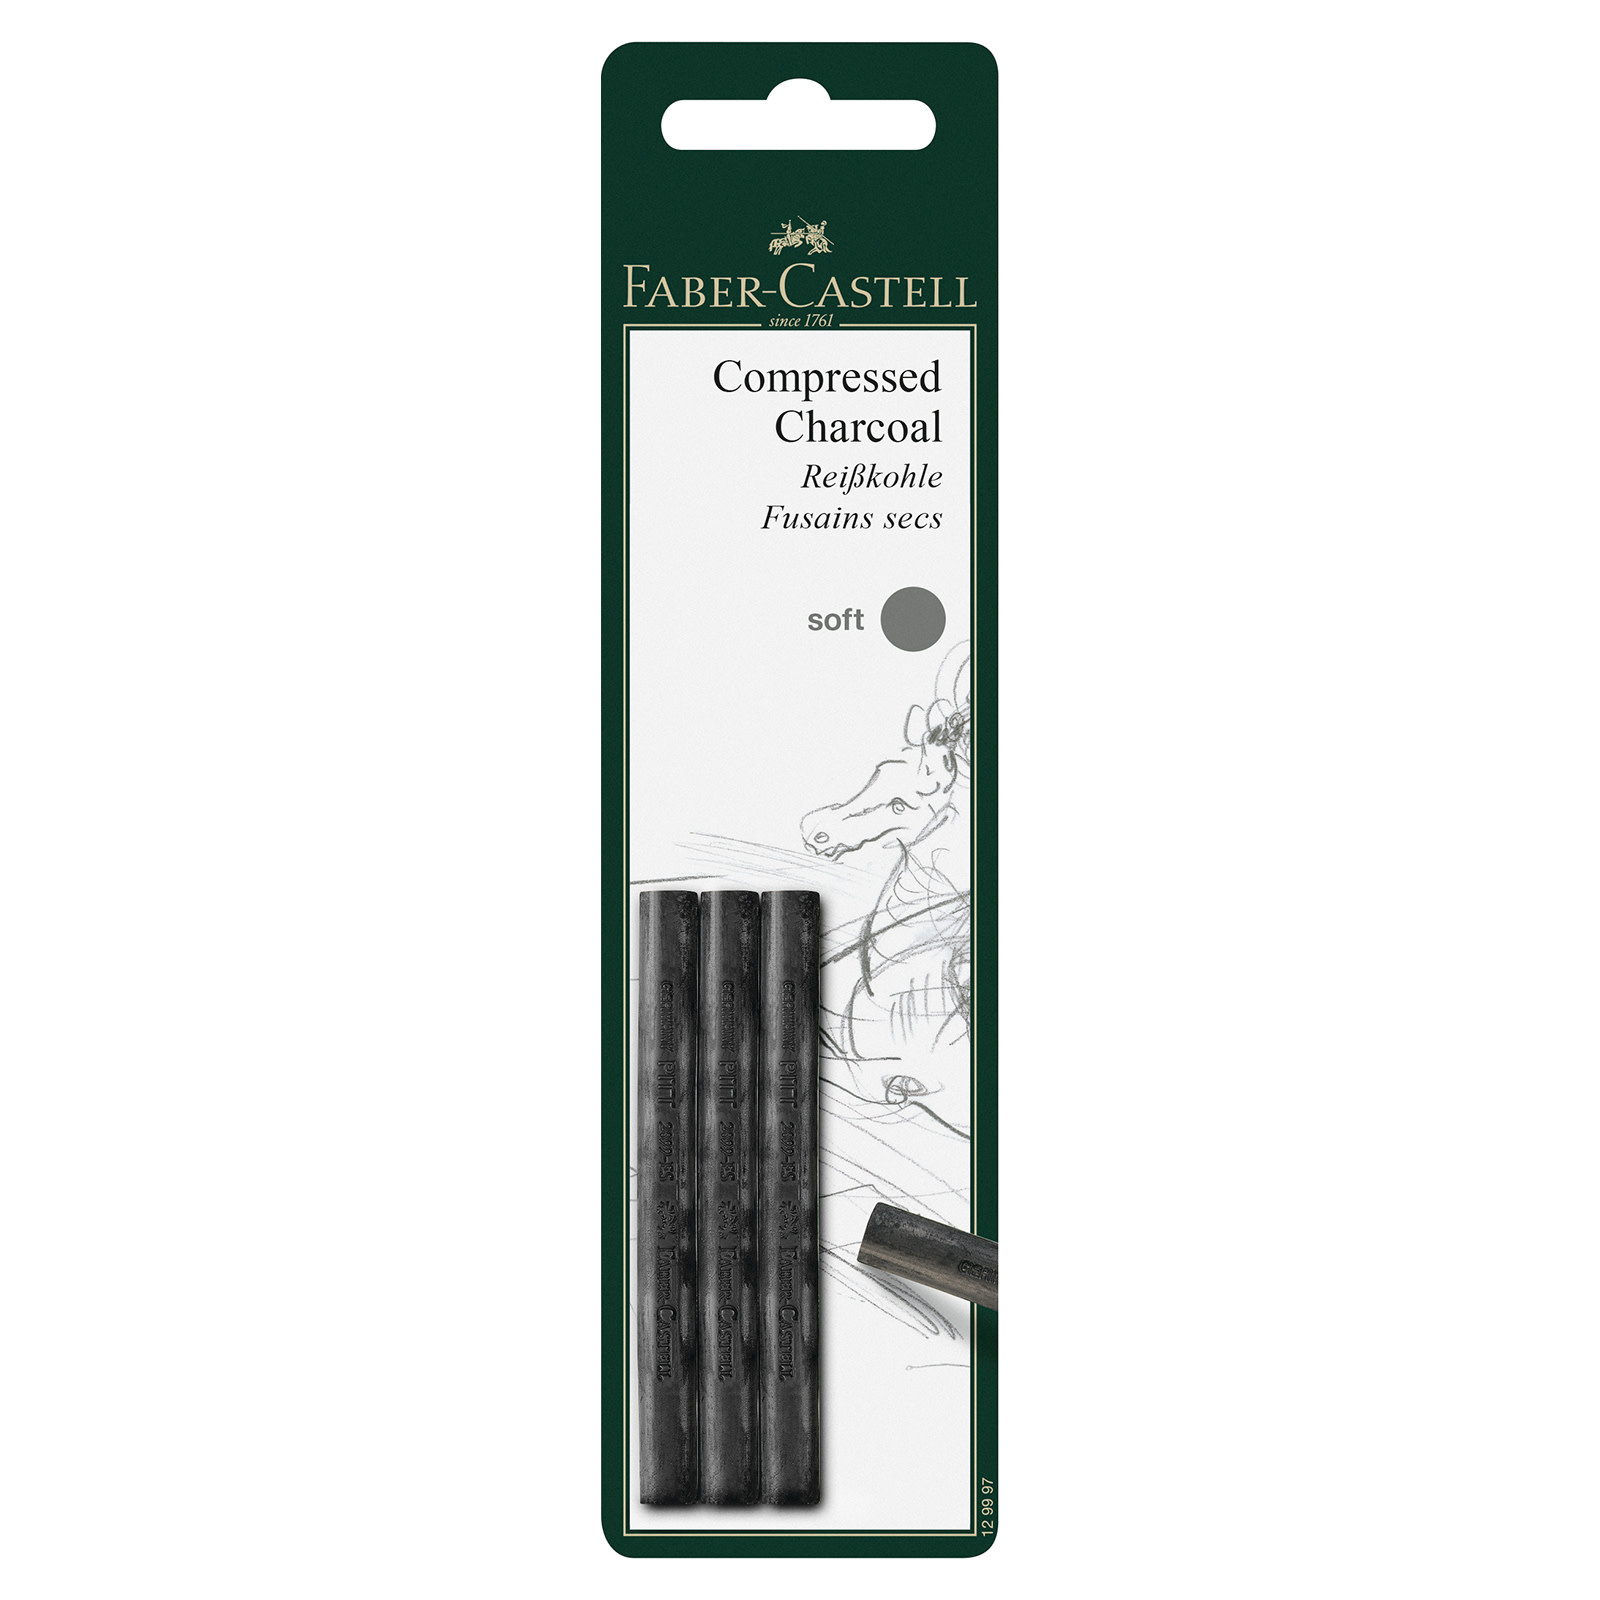 Faber-Castell PITT Compressed Charcoal Stix, 3-Crayon Set Medium